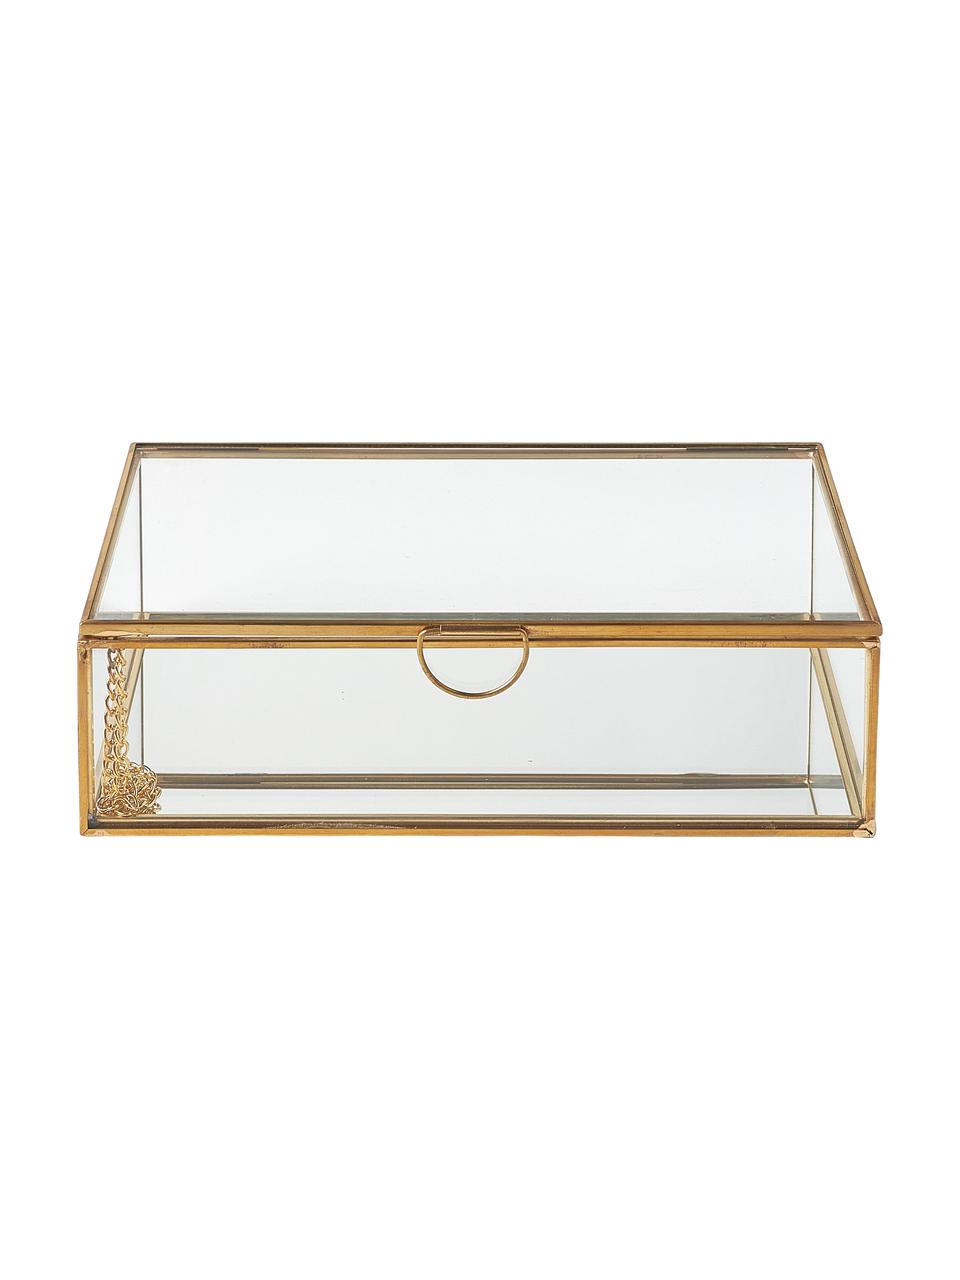 Skladovací box  ze skla Lirio, Transparentní, mosazná, Š 20 cm, V 6 cm